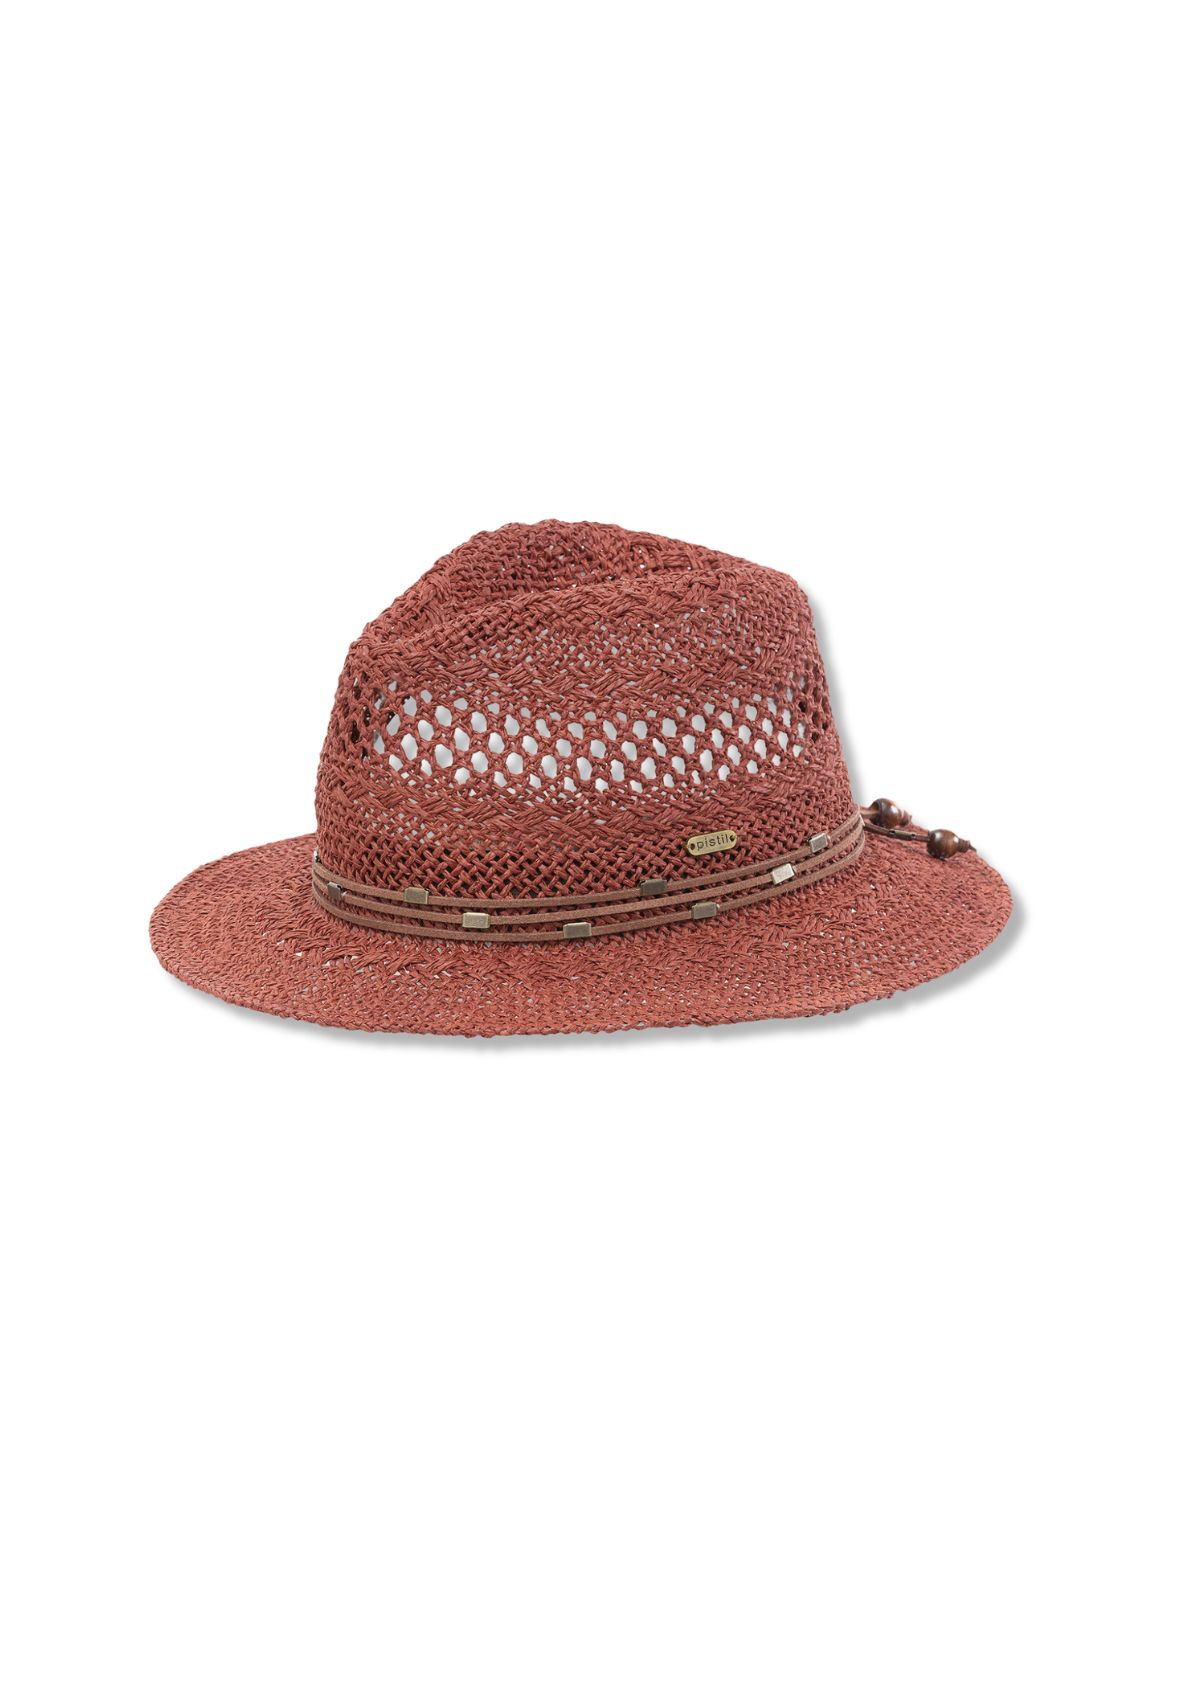 Accessories-Fashion-Hats-Ruby Jane.